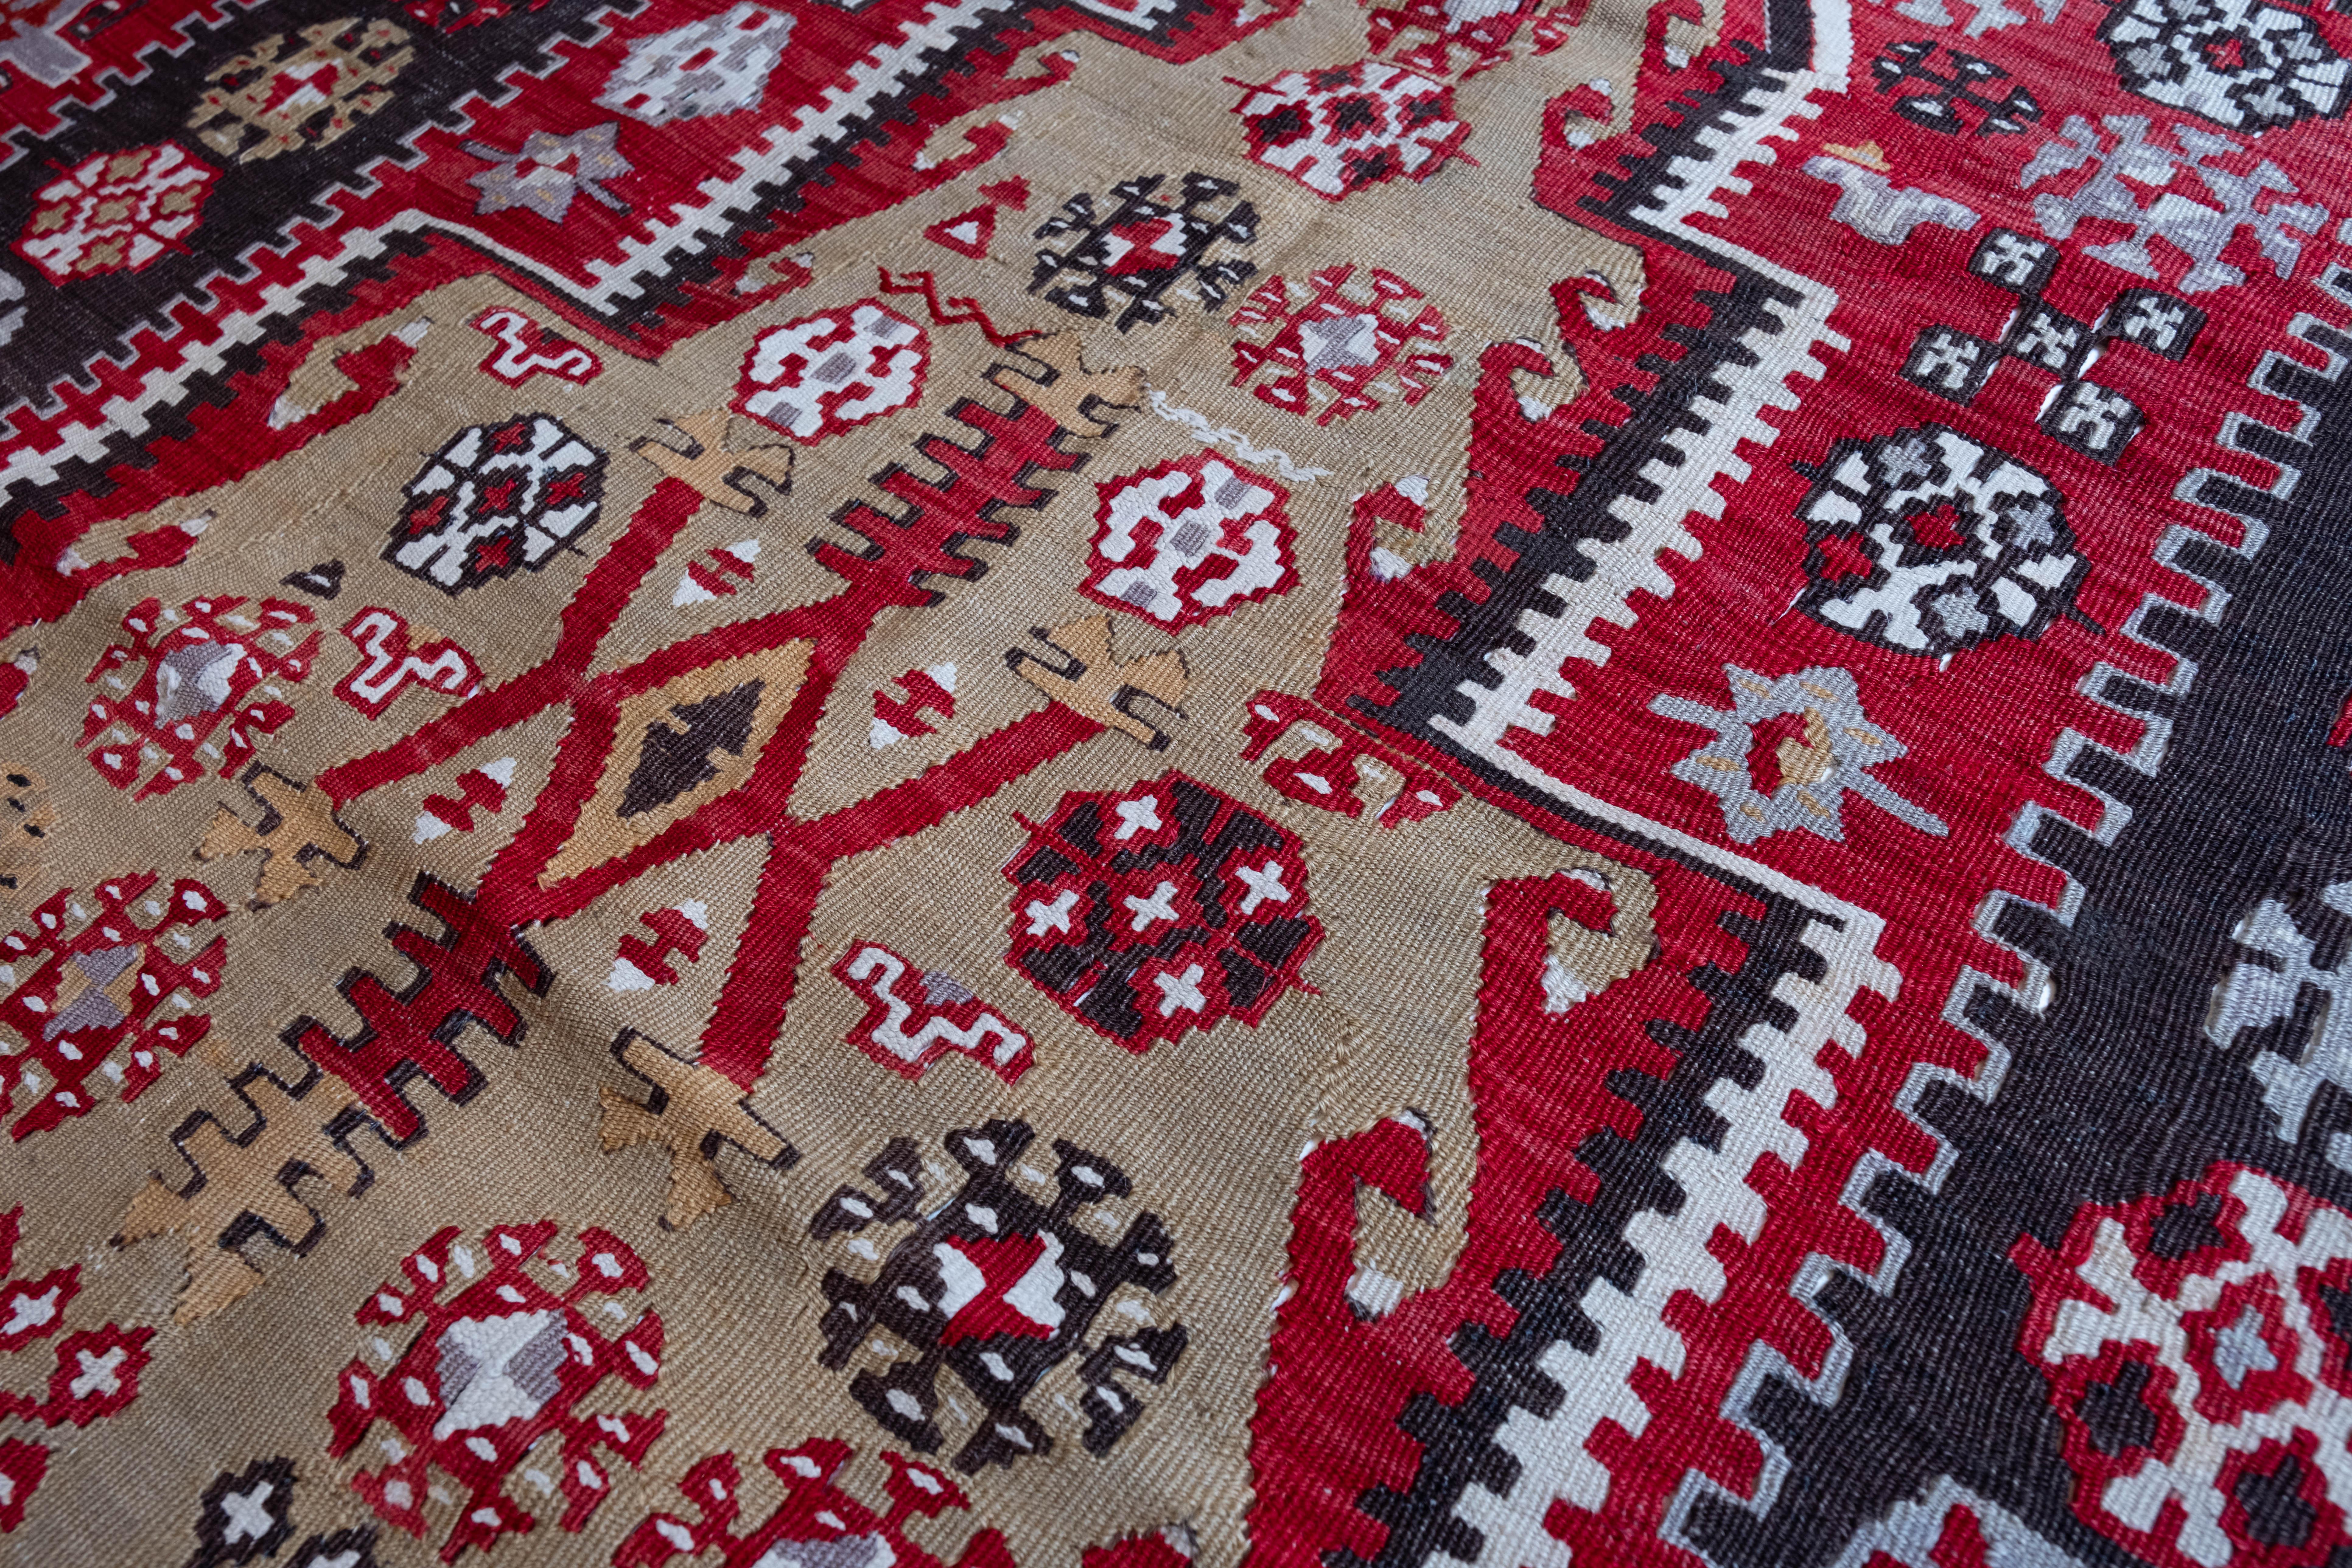 Hand-Woven Antique Gomurgen Kayseri Kilim Rug Wool Old Central Anatolian Turkish Carpet For Sale